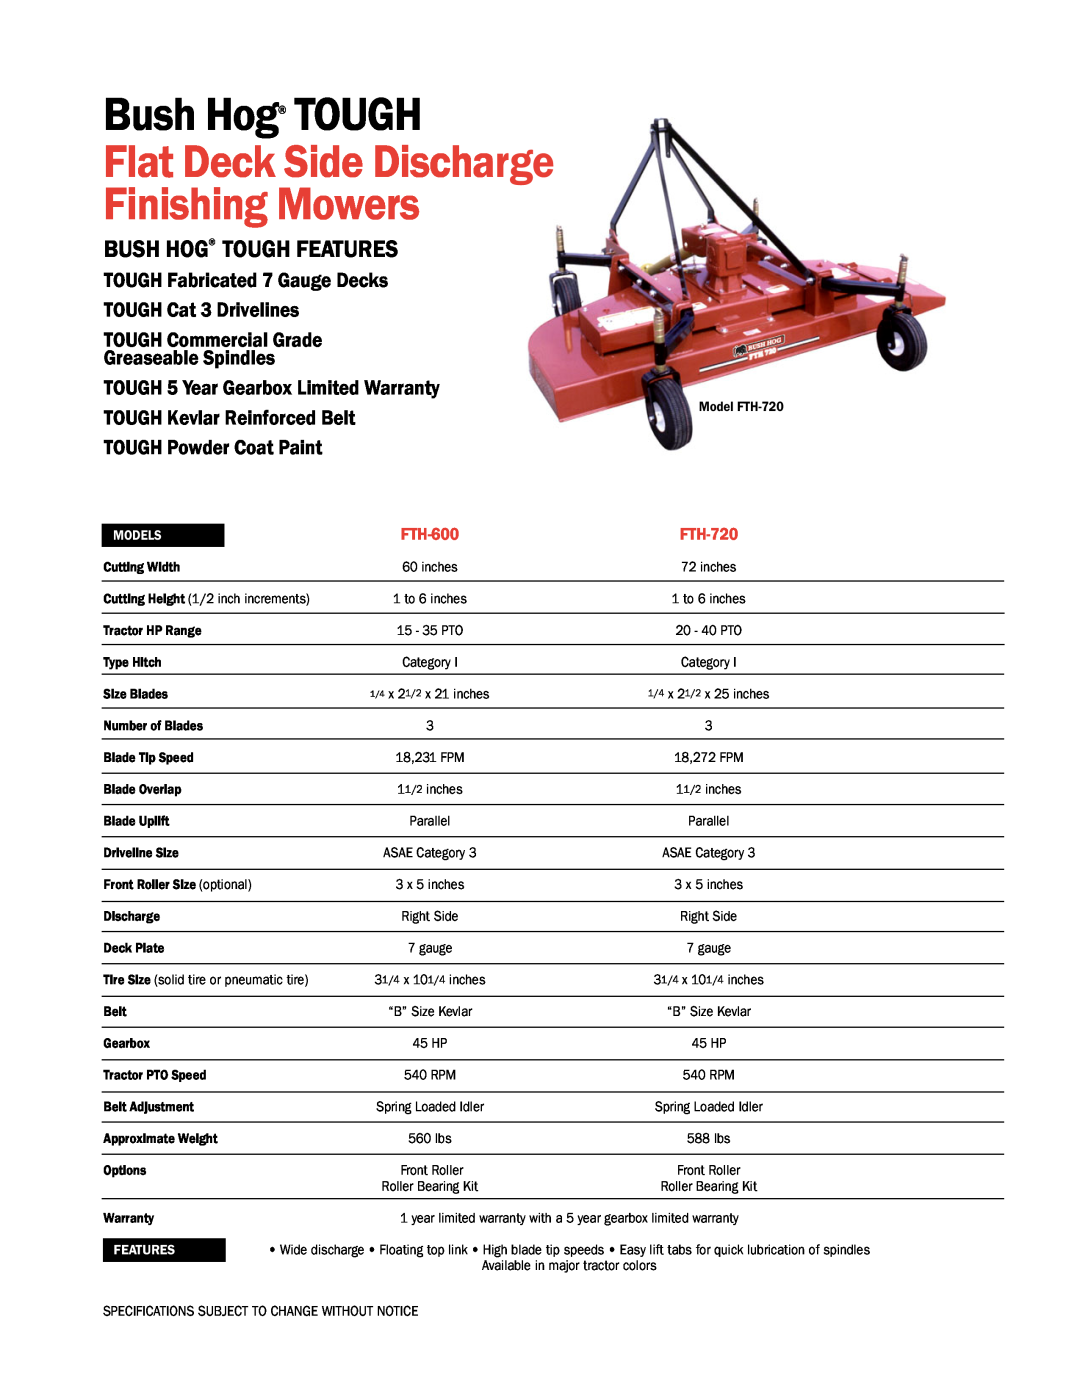 Bush Hog FTH-600 specifications Flat Deck Side Discharge Finishing Mowers, Bush Hog TOUGH Features, FTH-720, Models 